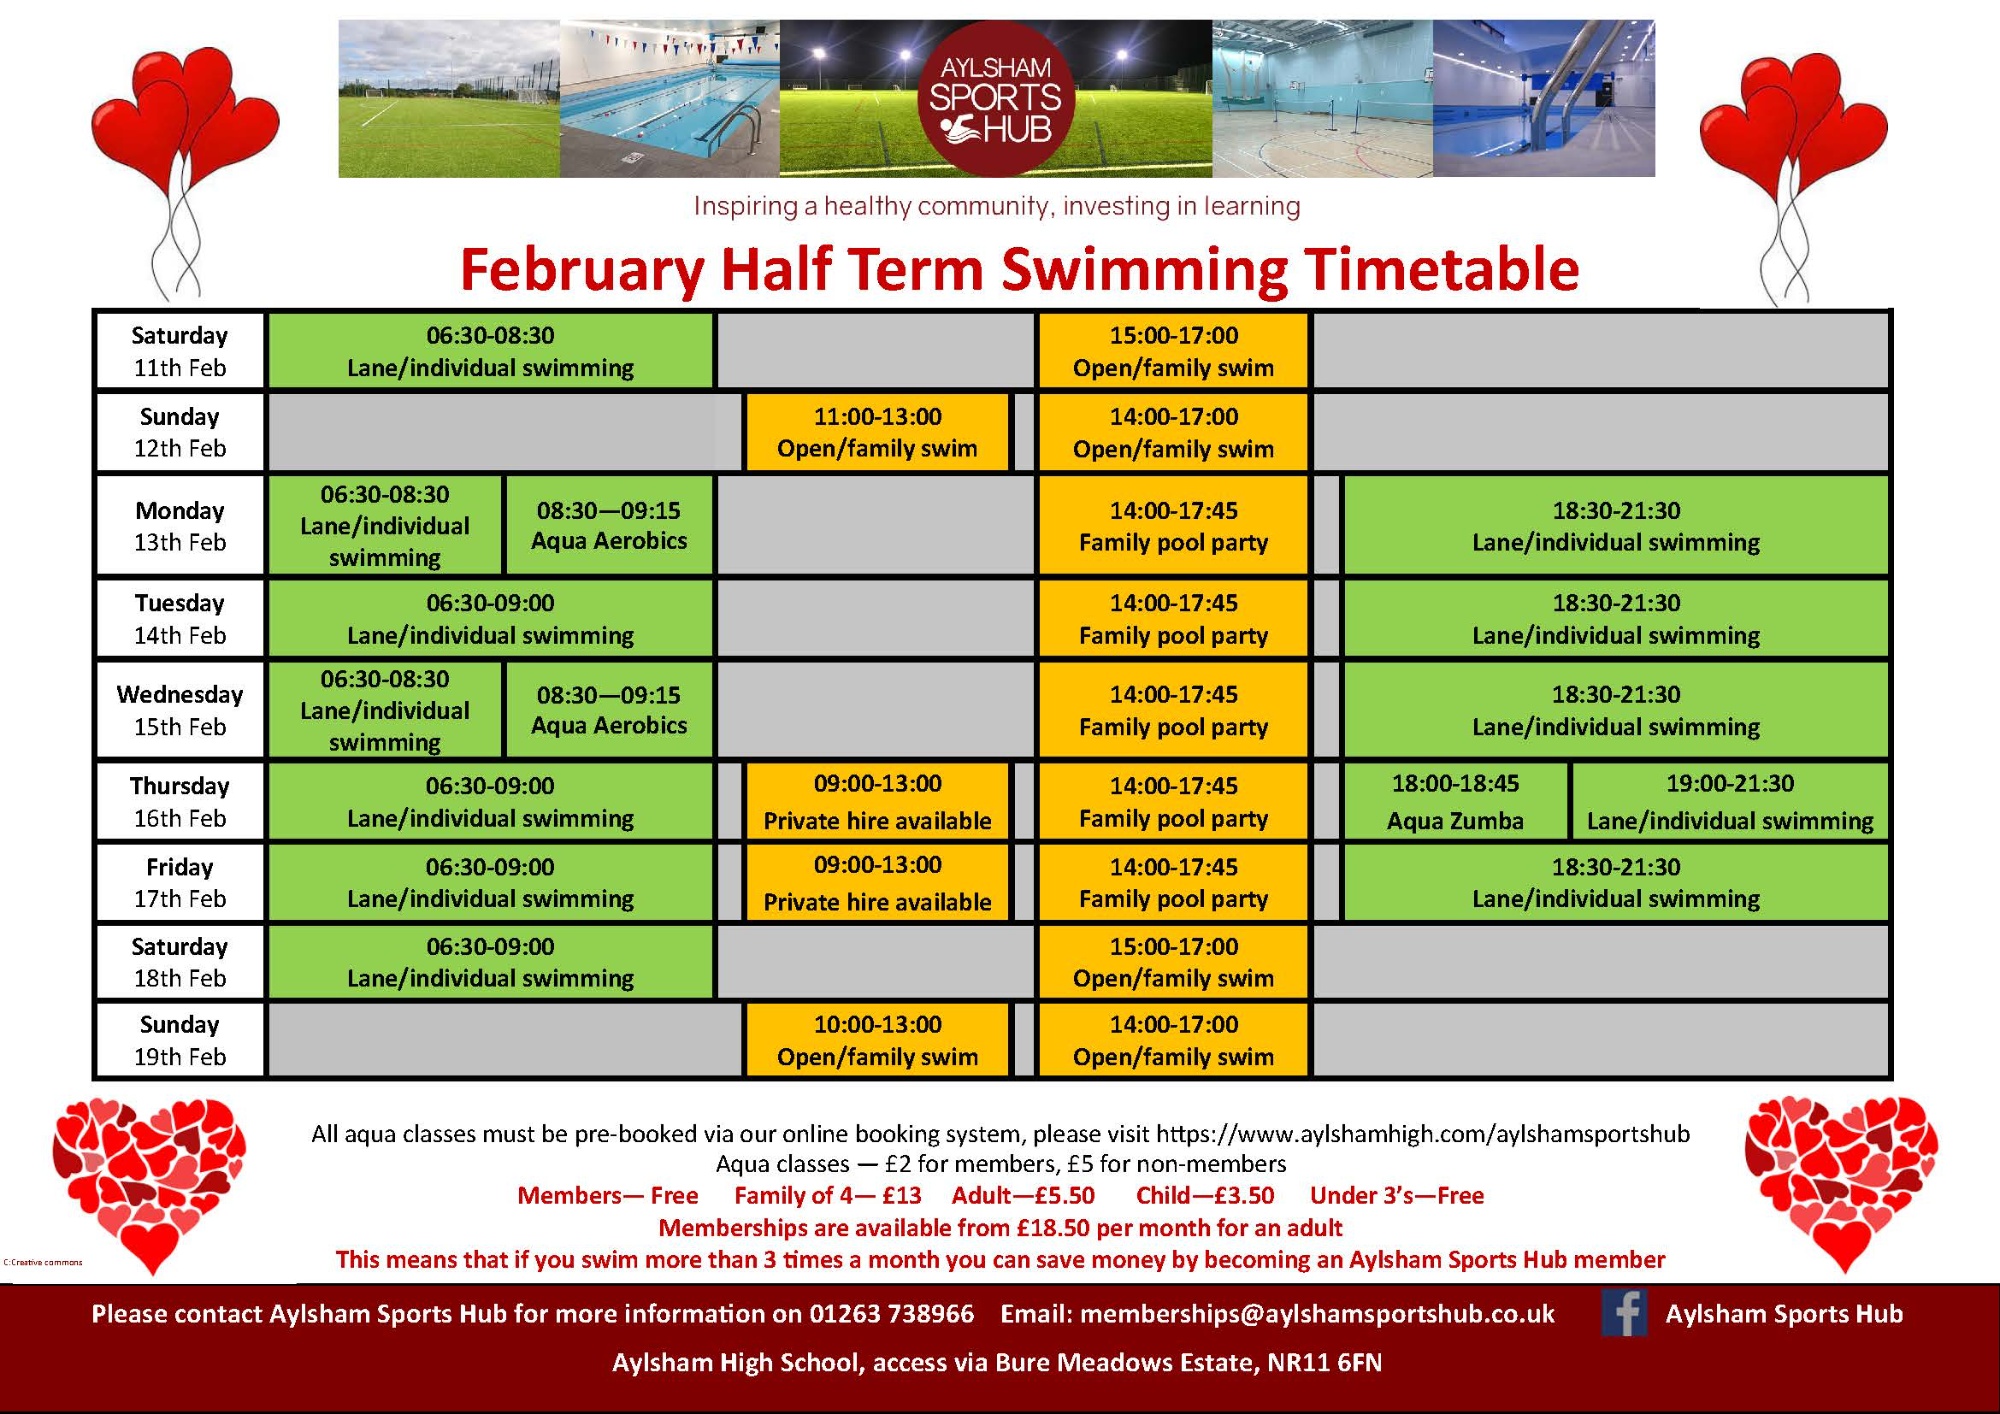 Aylsham Sports Hub Half Term Swimming Pool Timetable